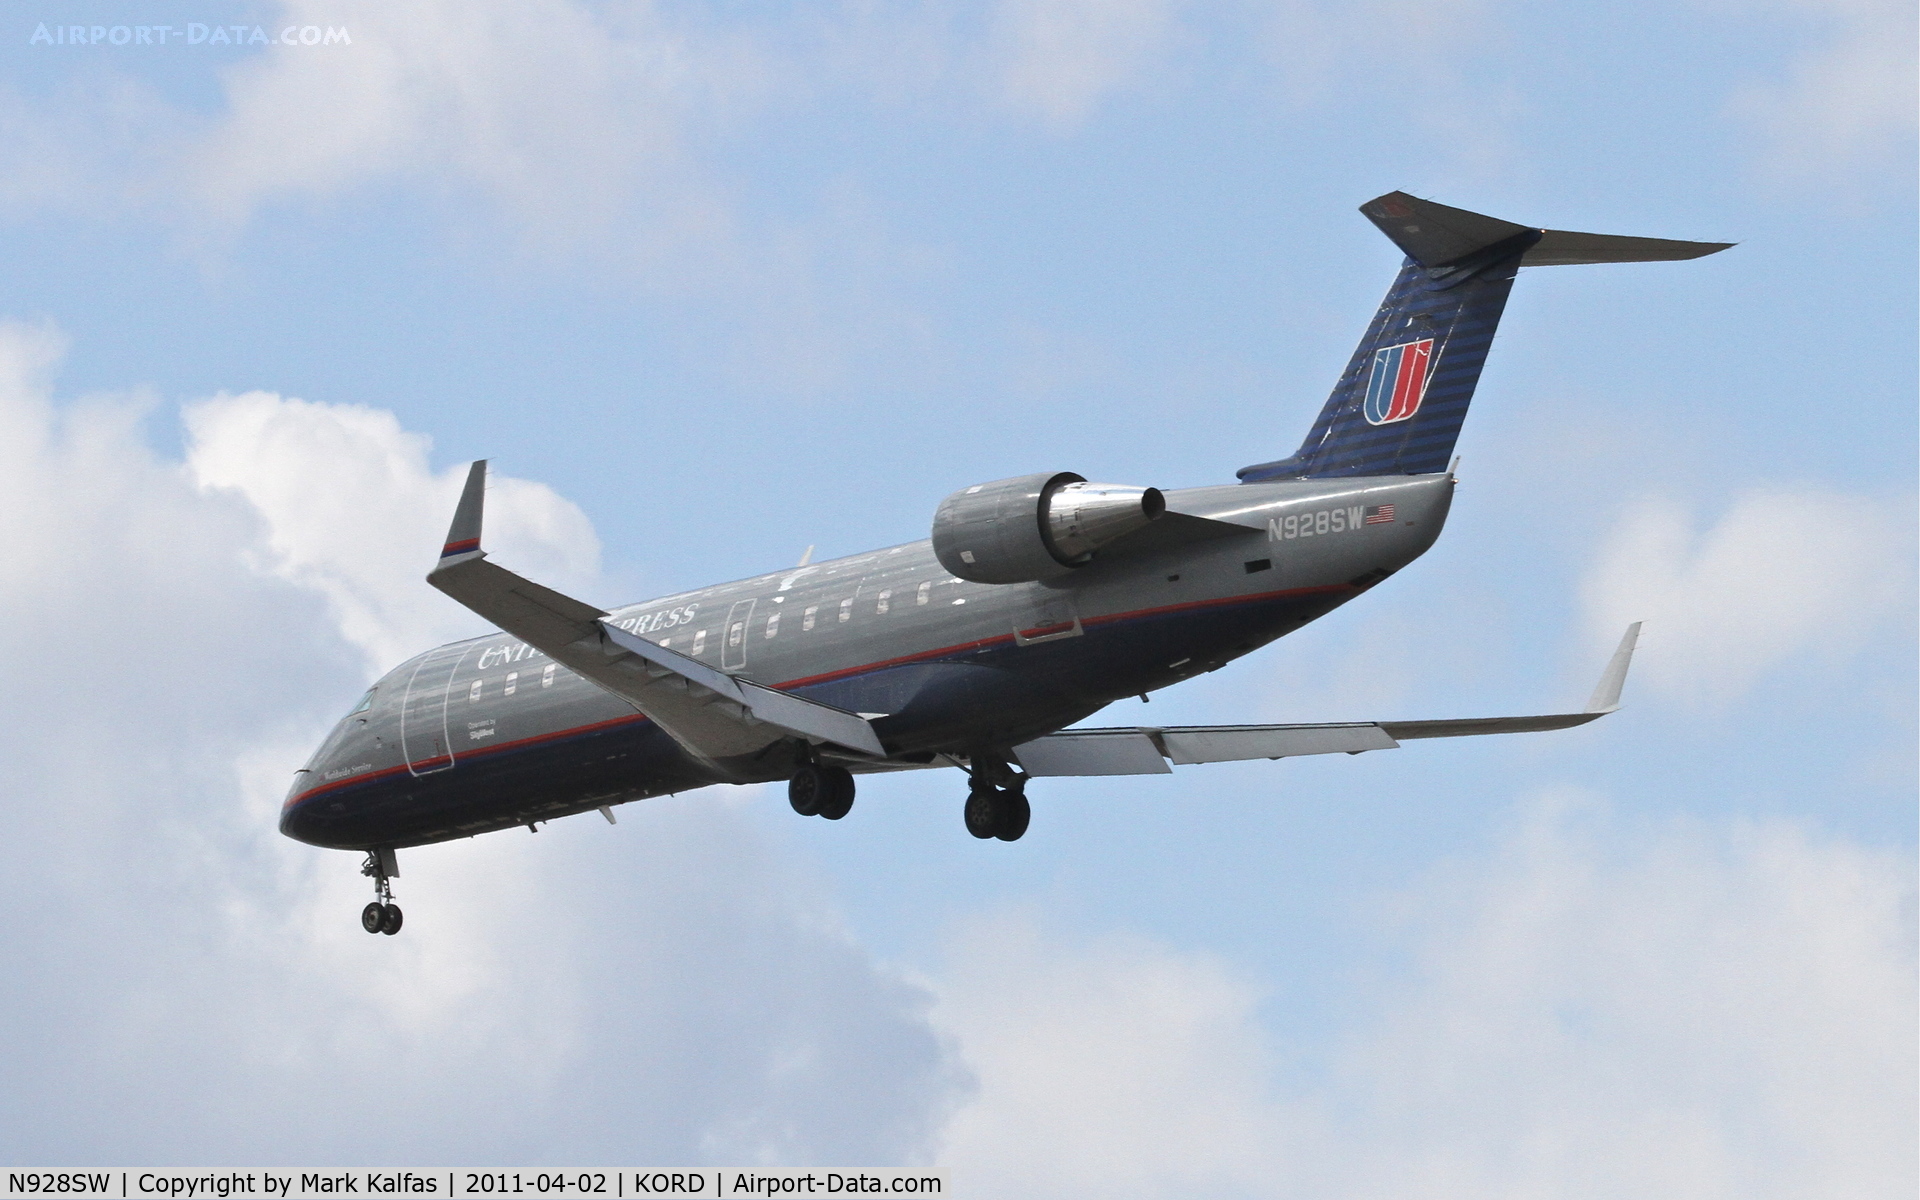 N928SW, 2002 Bombardier CRJ-200LR (CL-600-2B19) C/N 7701, SkyWest Bombardier CL-600-2B19, SKW6756 arriving from KCOS, on approach RWY 28 KORD.